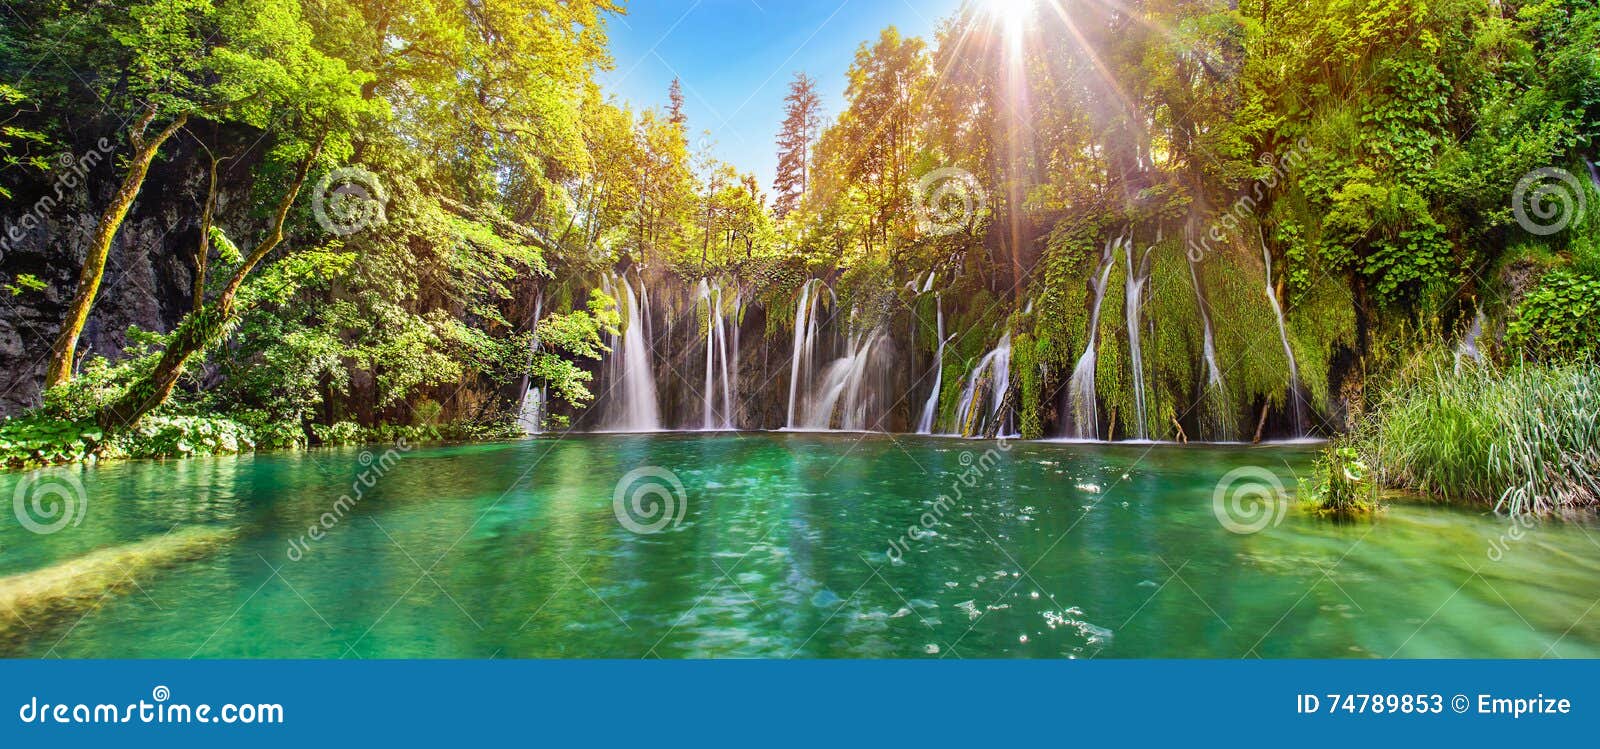 amazing waterfall panorama in plitvice lakes national park, cro